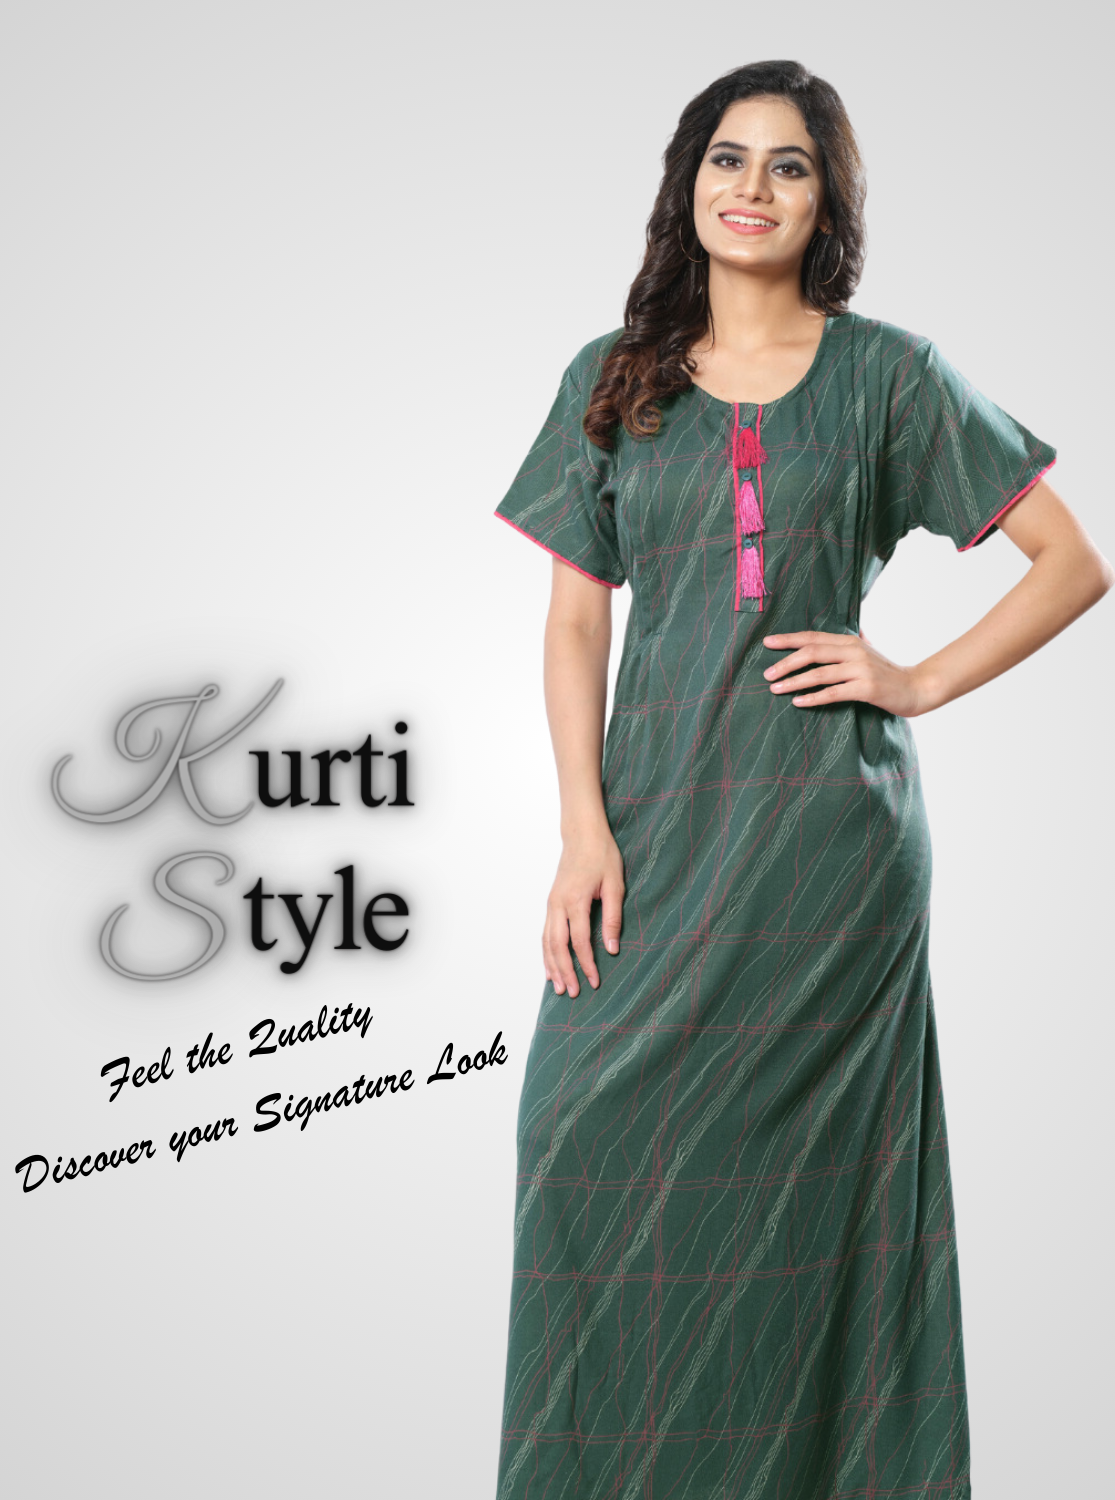 New MANGAI Premium Alpine KURTI Style | Beautiful Stylish KURTI Model | Side Pocket | Half Sleeve | Perfect Nightwear Collection's for Trendy Women's